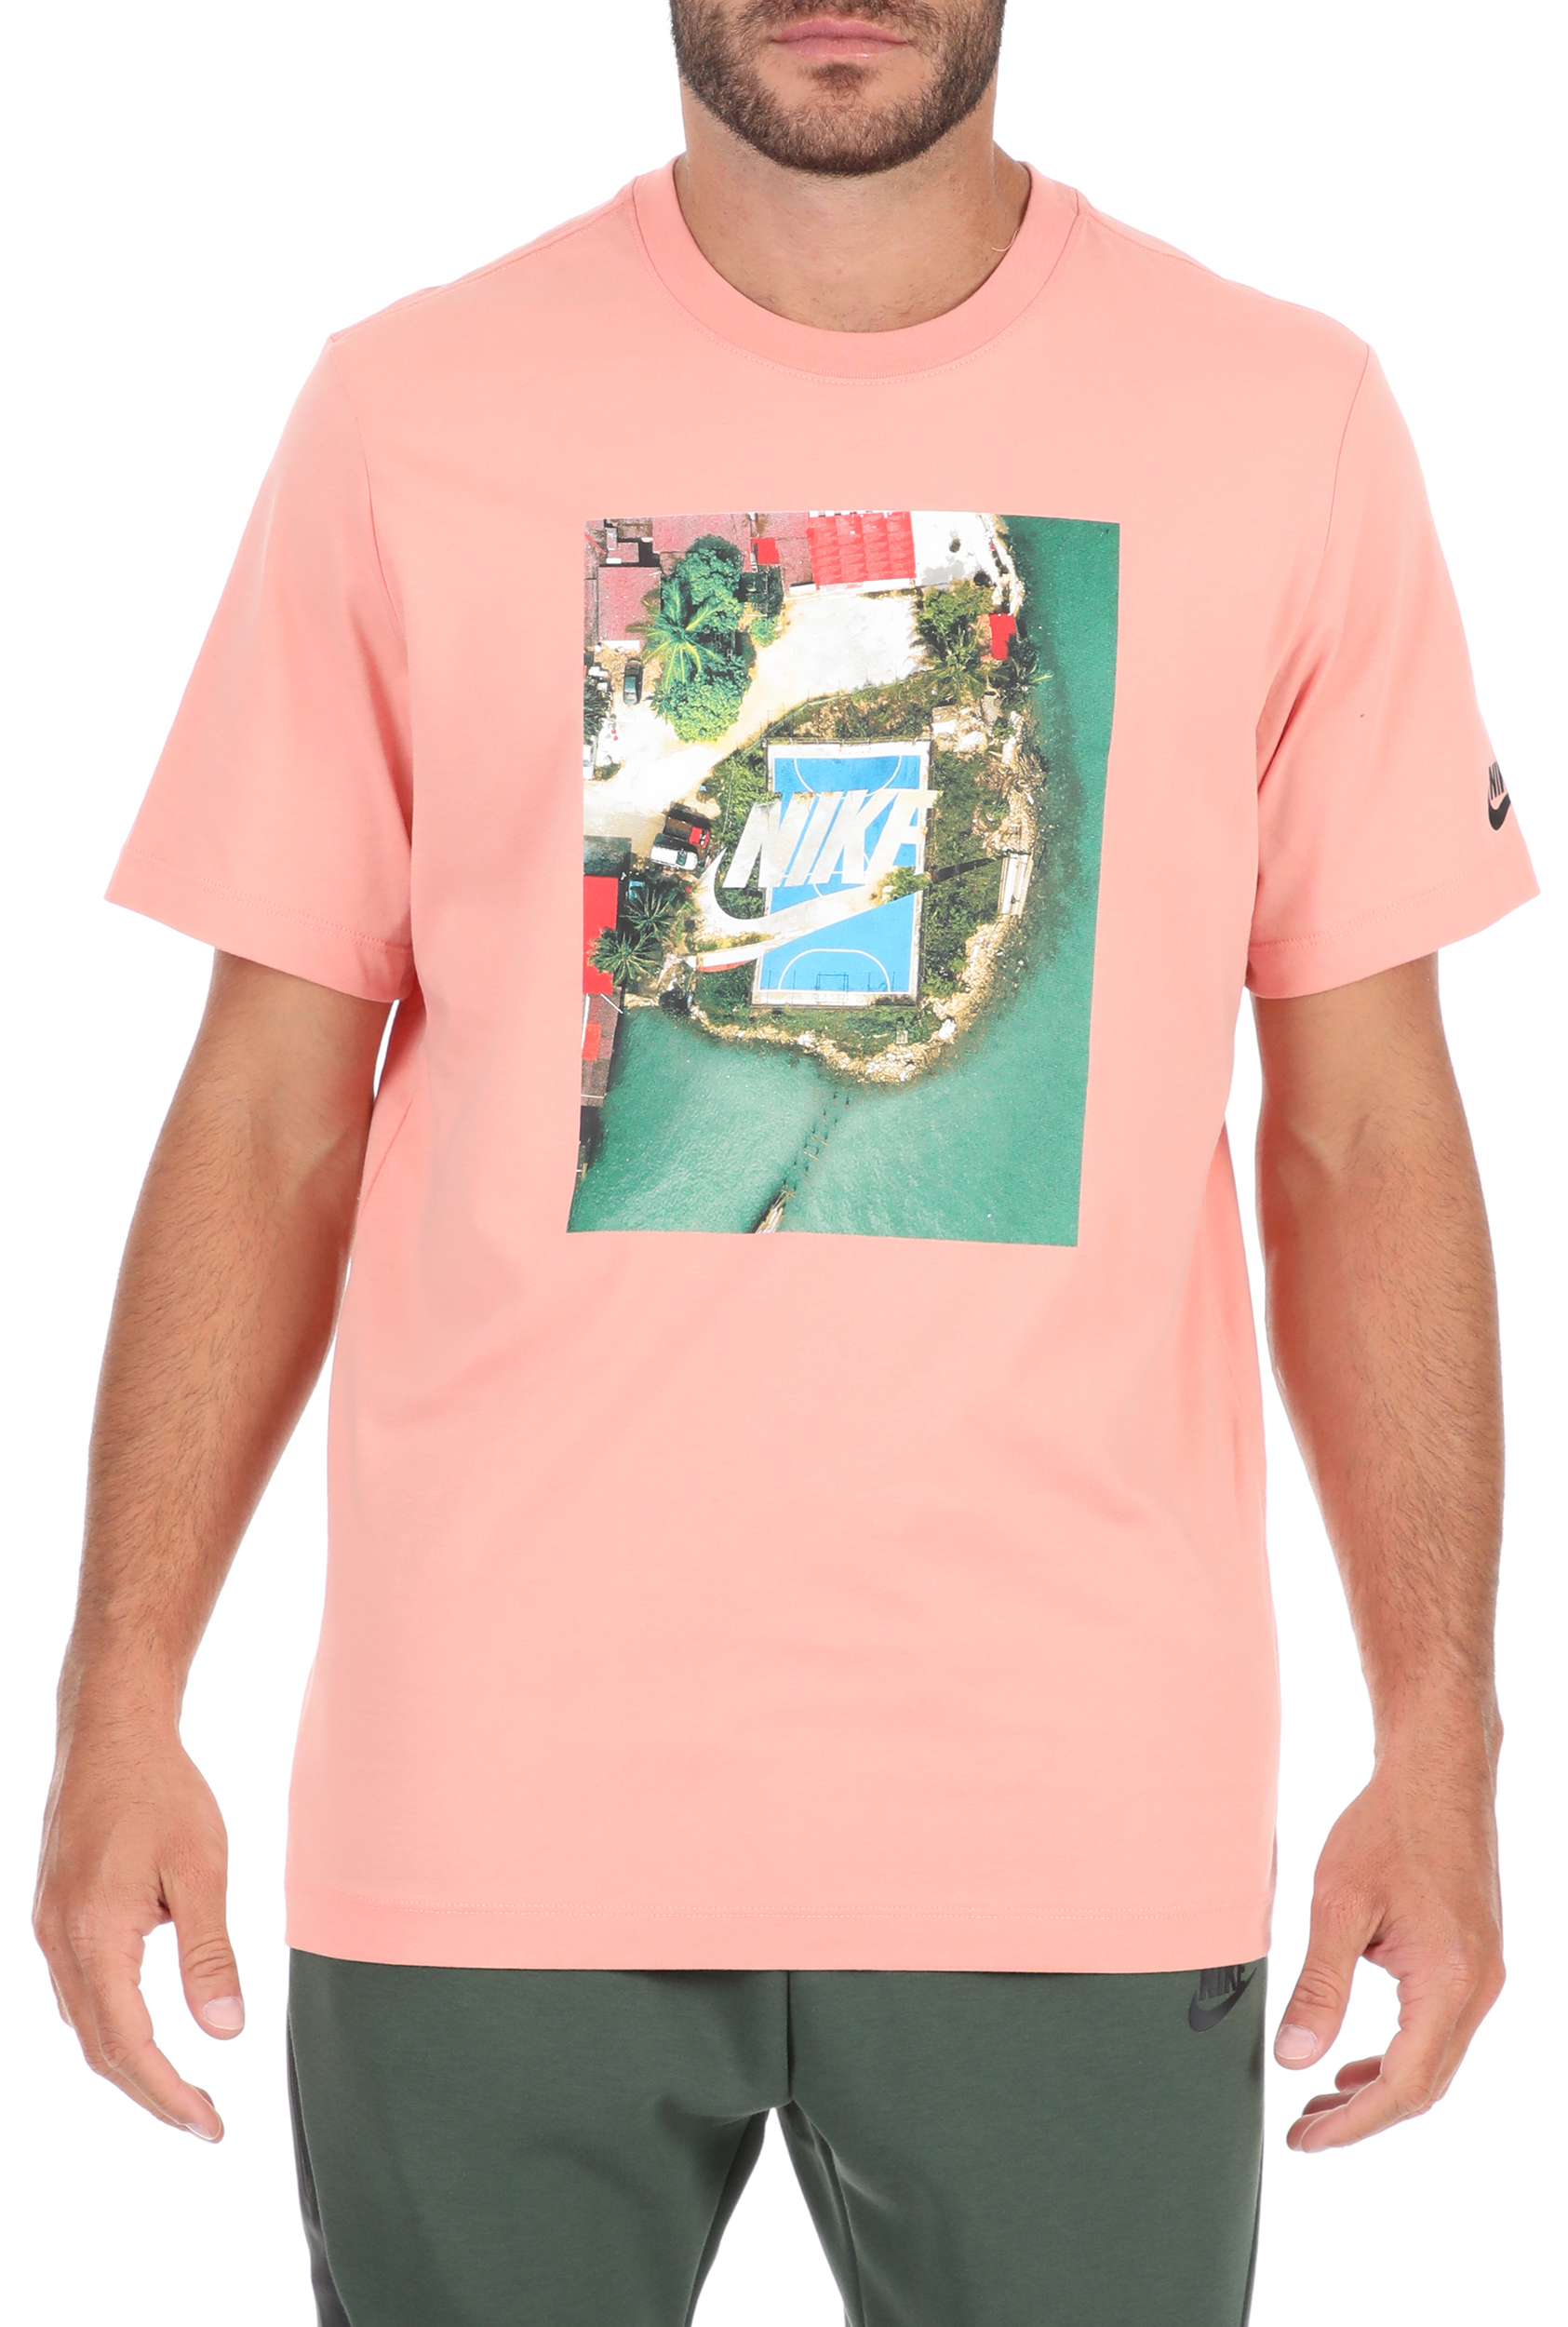 NIKE - Ανδρικό t-shirt NIKE NSW SS TEE COURT 2 ροζ Ανδρικά/Ρούχα/Αθλητικά/T-shirt